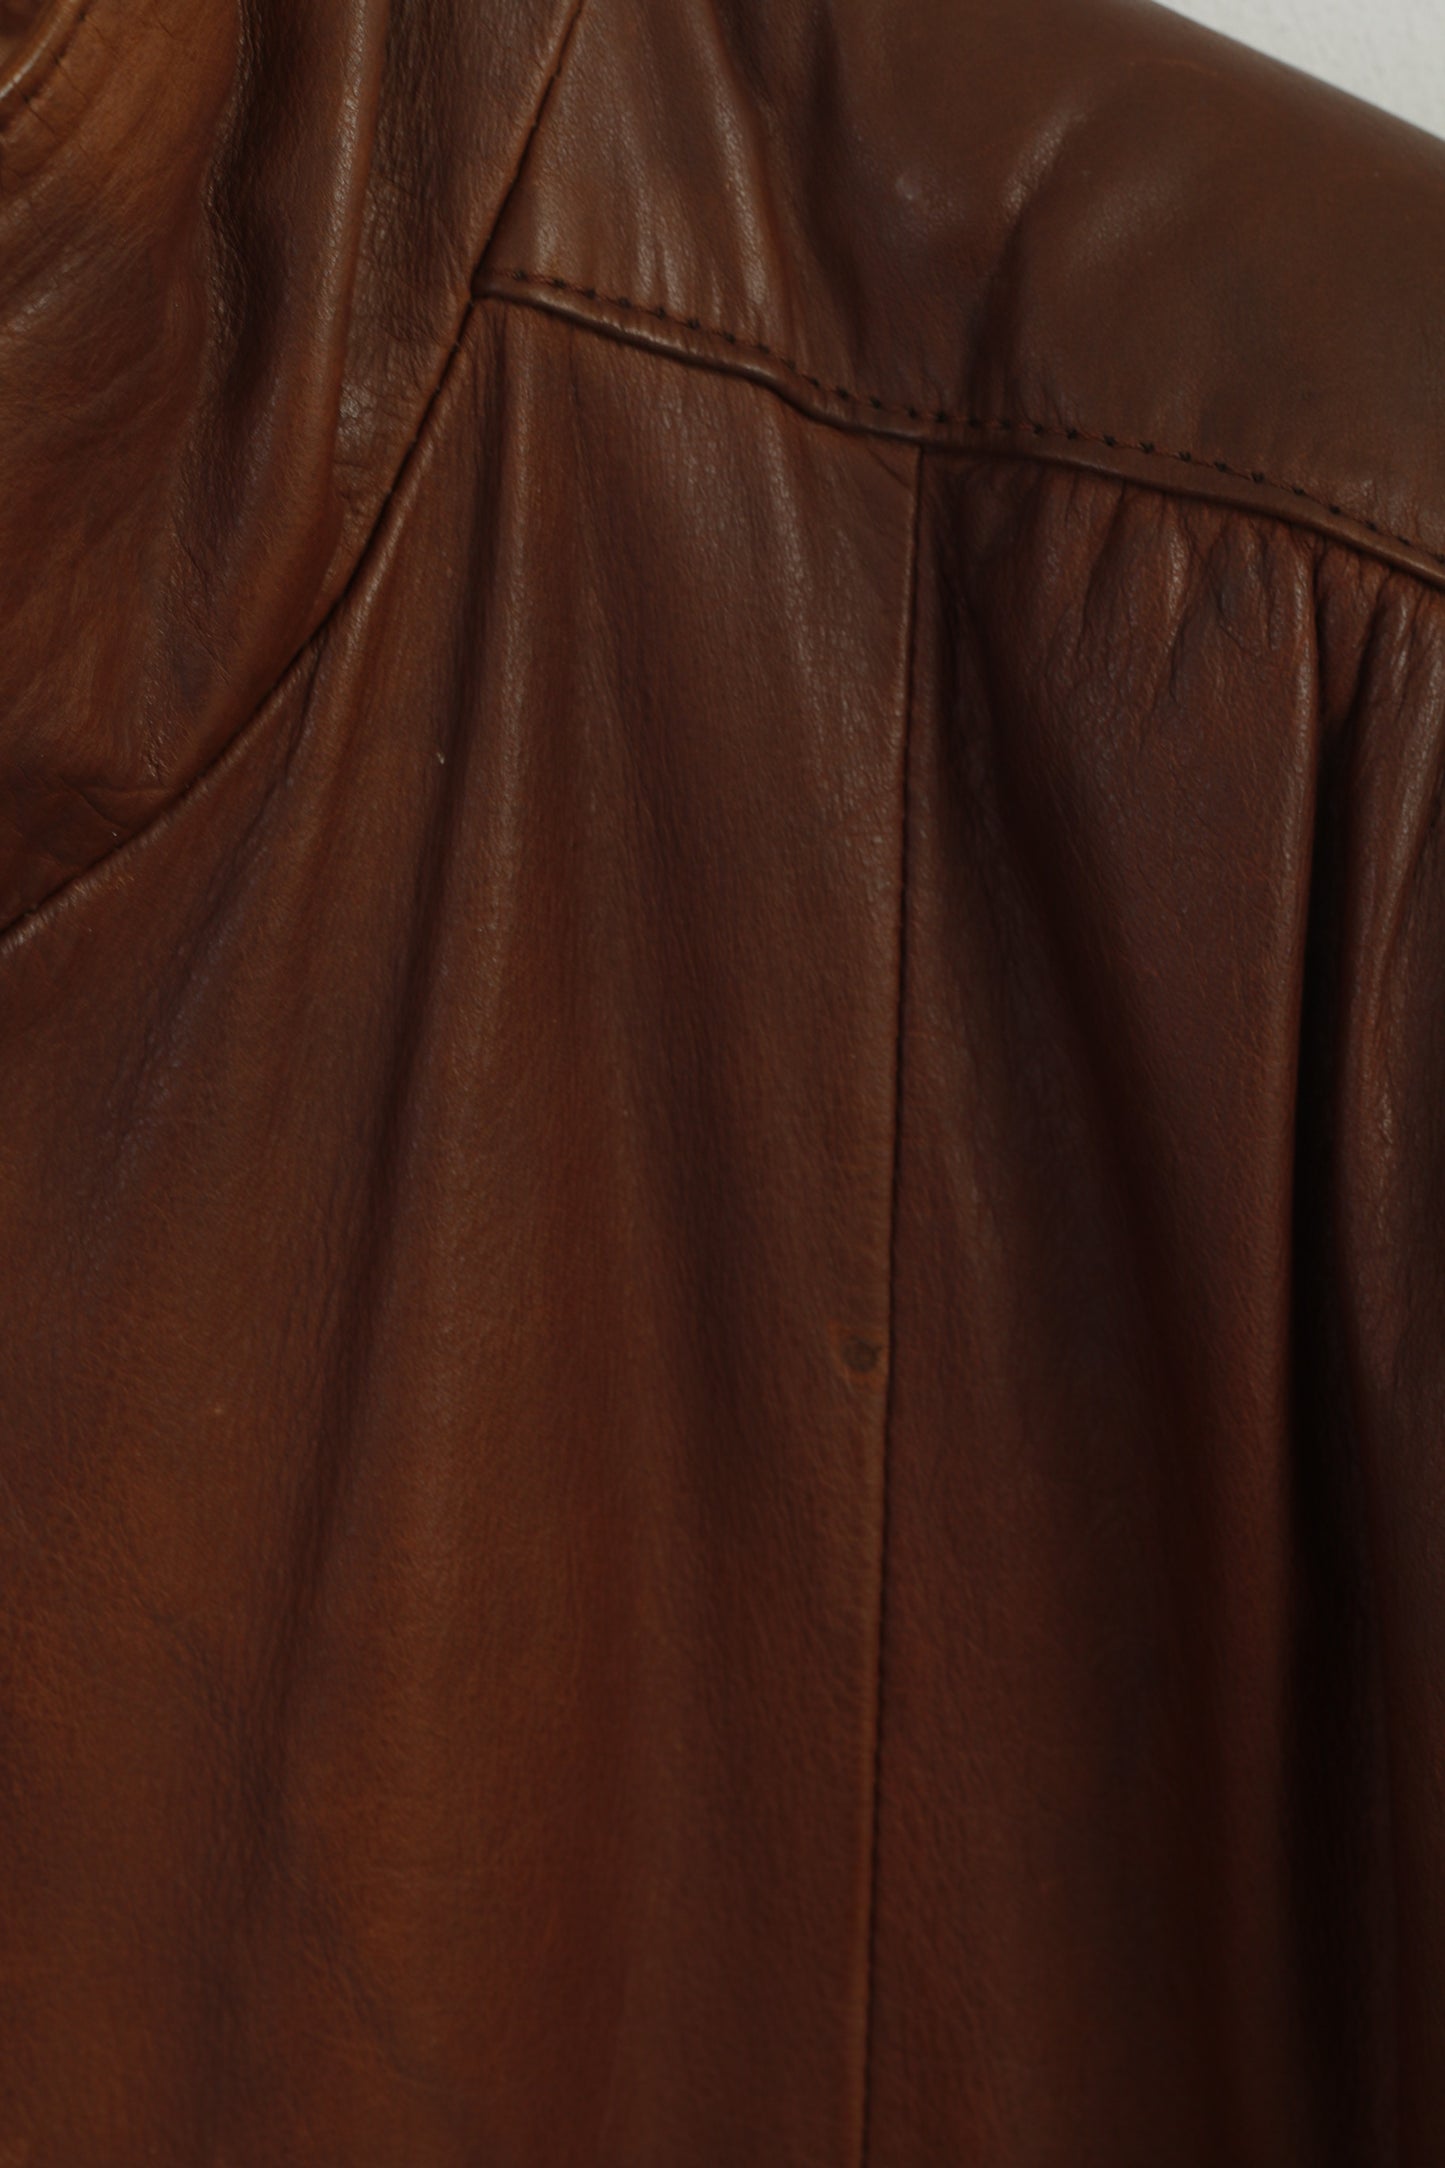 Janbell Women 38 Jacket Brown Leather Vintage Bomber Full Zipper Biker Top